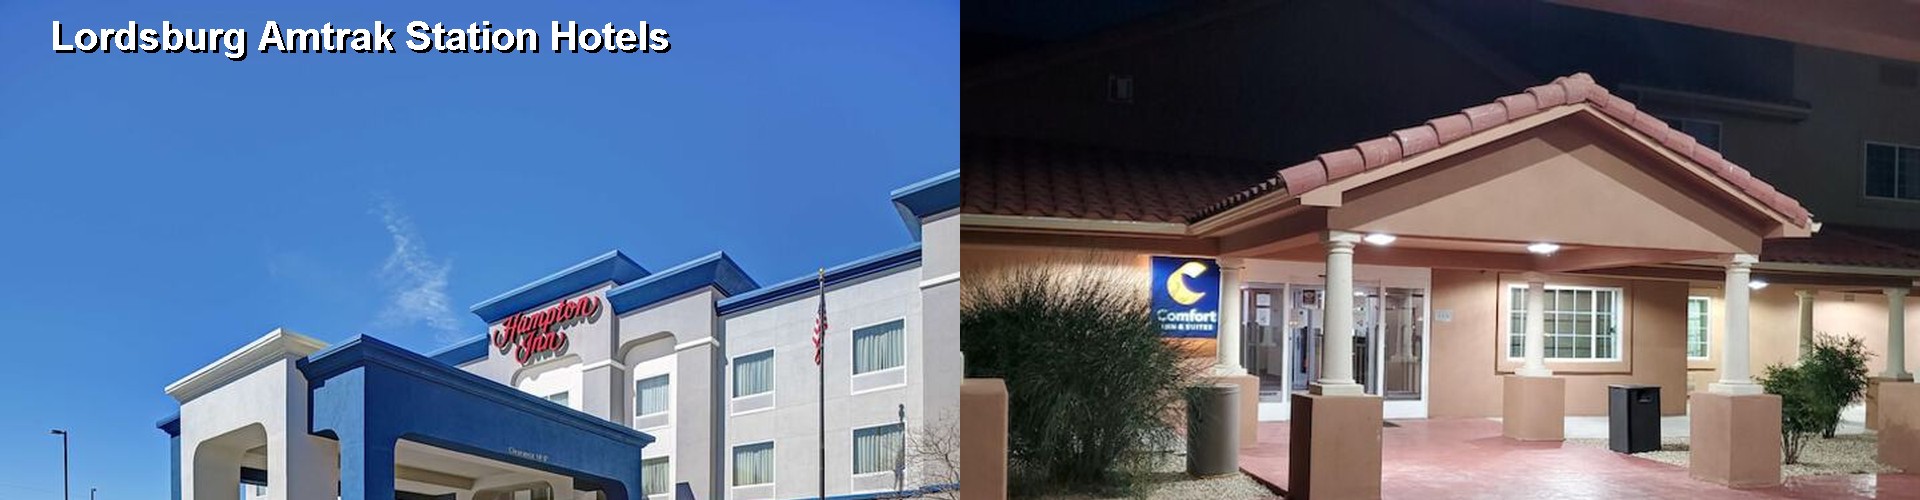 2 Best Hotels near Lordsburg Amtrak Station